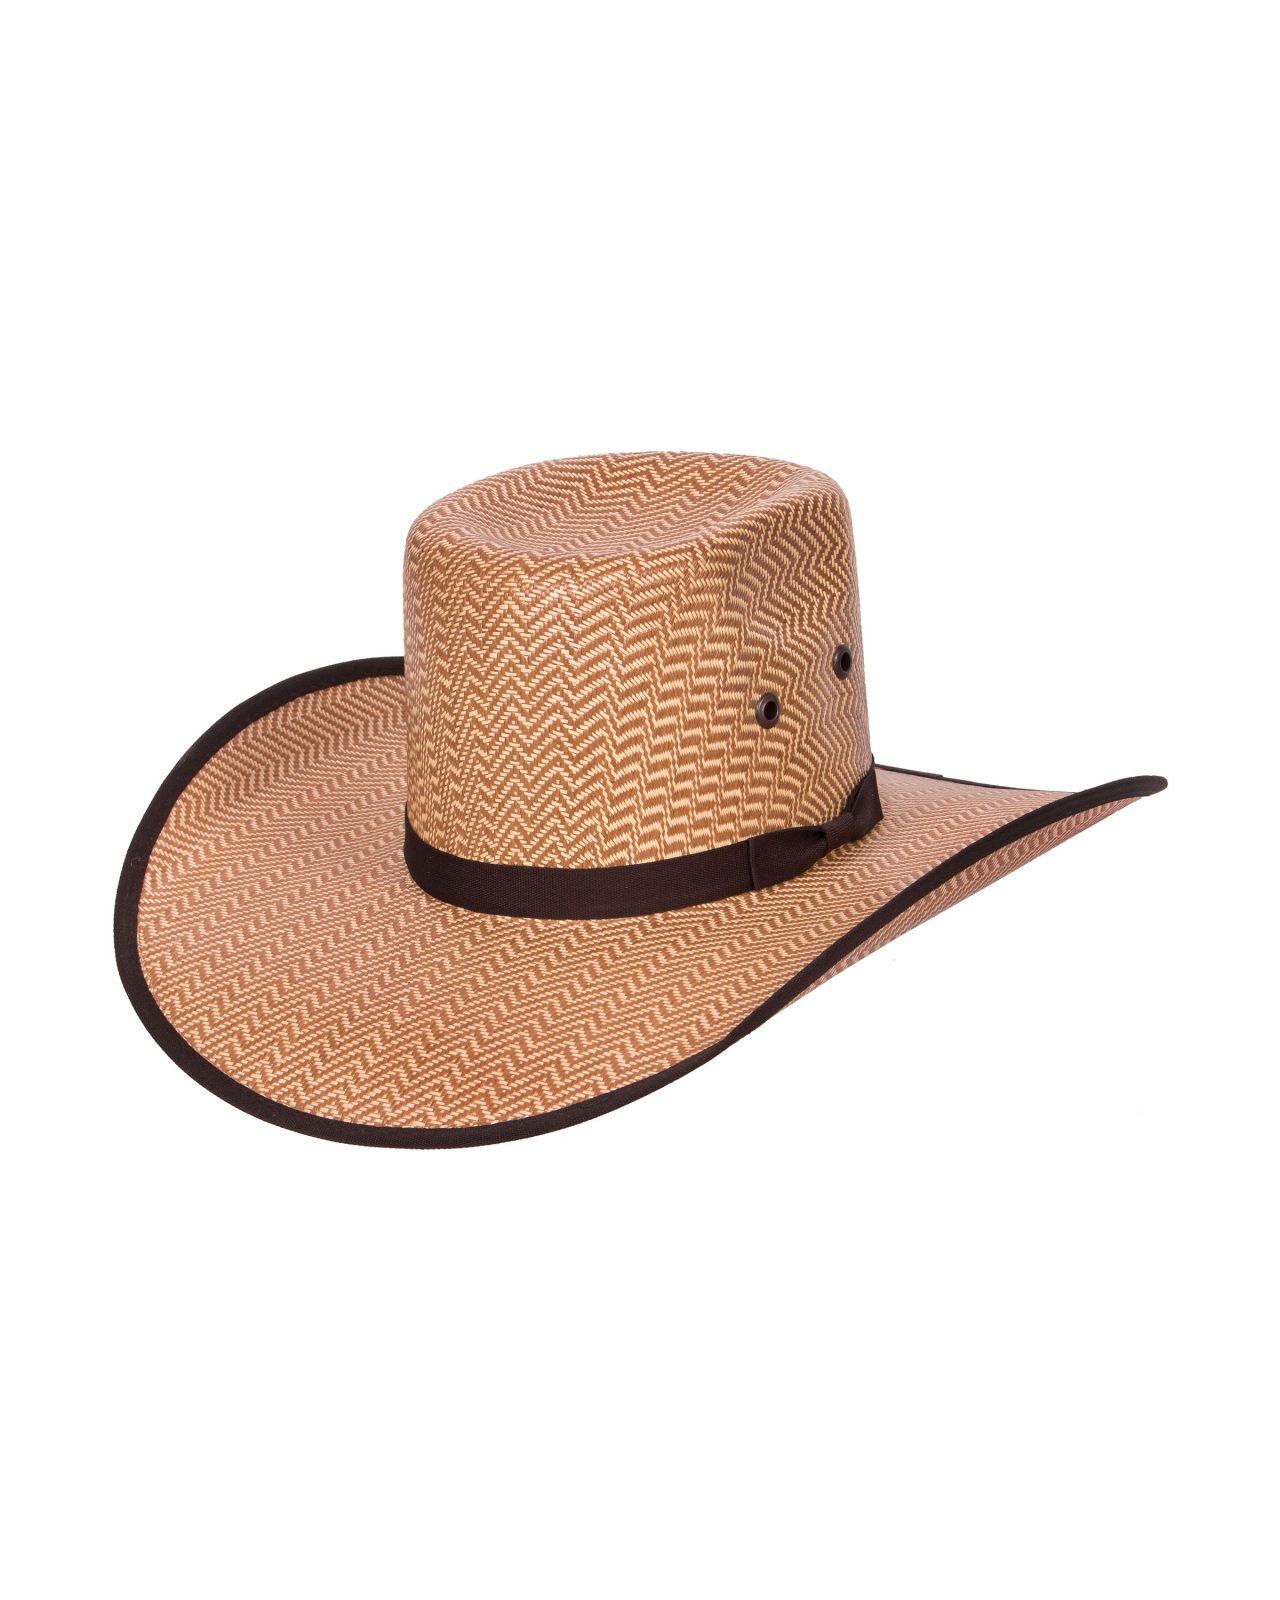 STONE HATS - Kid's Tall Crown Straw Hat ( Natural ) - El Potrerito